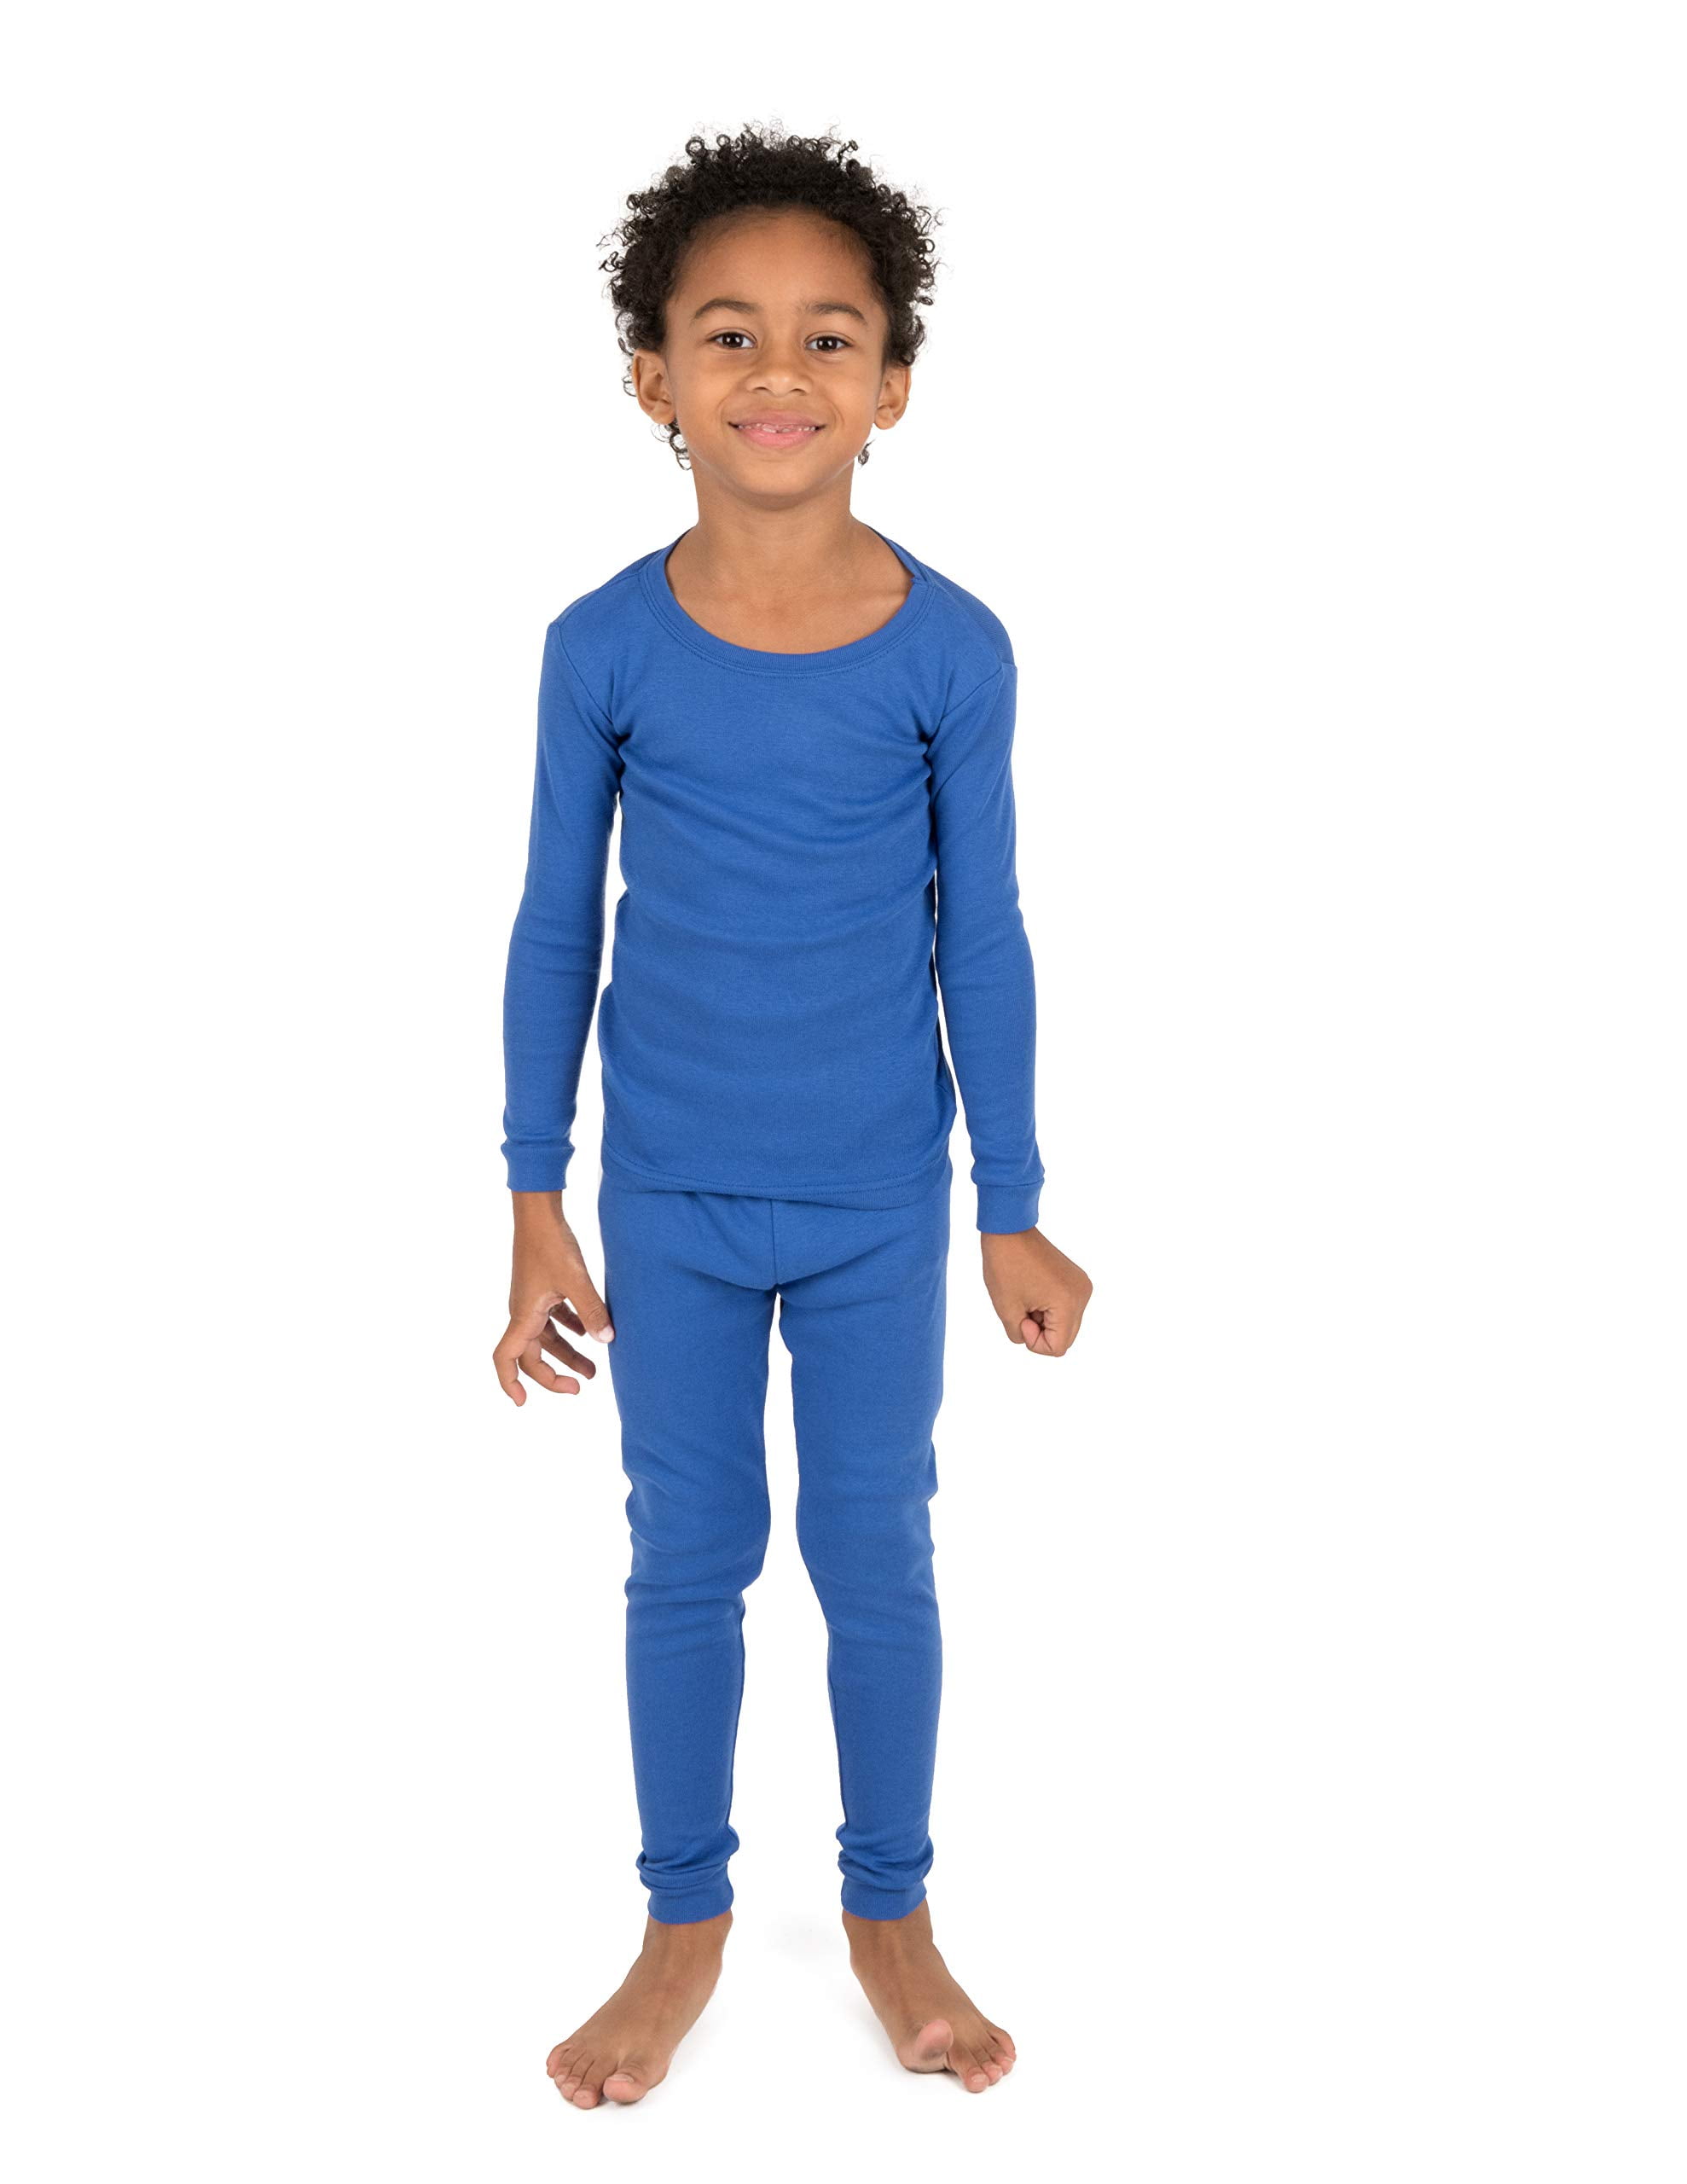 Girls and Boys Apples /& Pajamas Stretch Cotton 2-Piece PJ Set for Kids